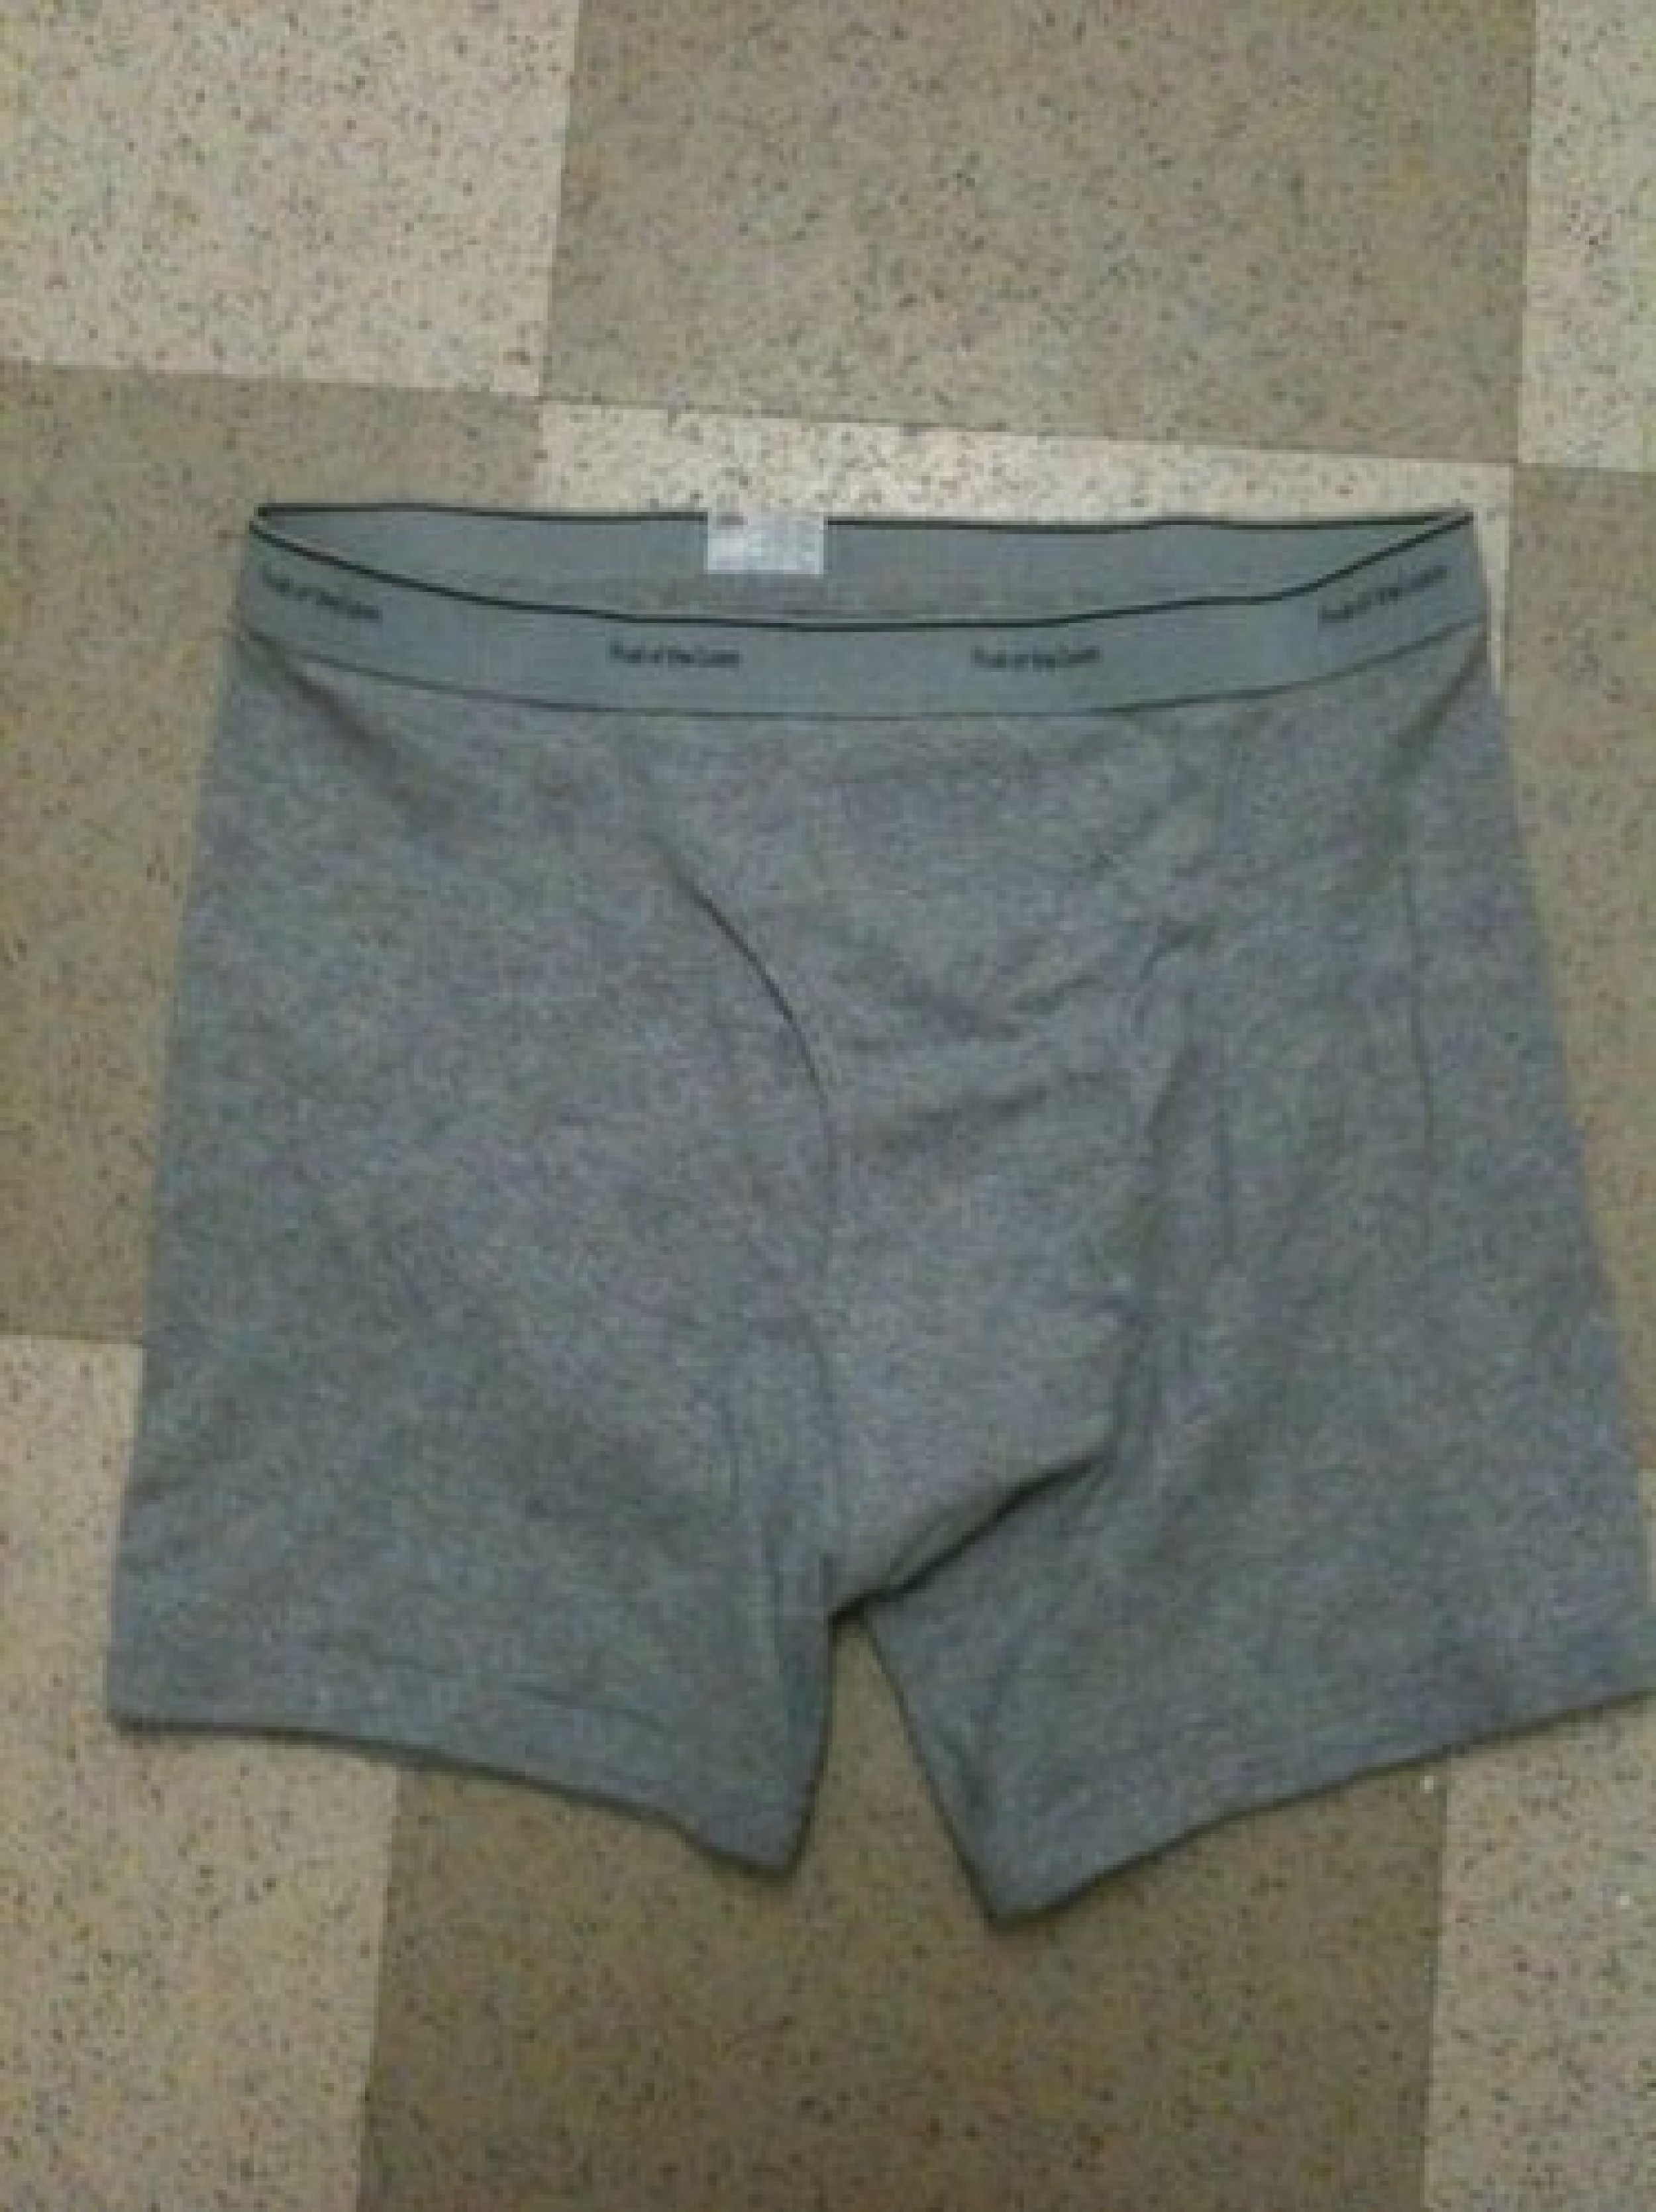 Jeremy Lin Underwear on eBay: Boxer Briefs up for 'Linsane' Auction ...